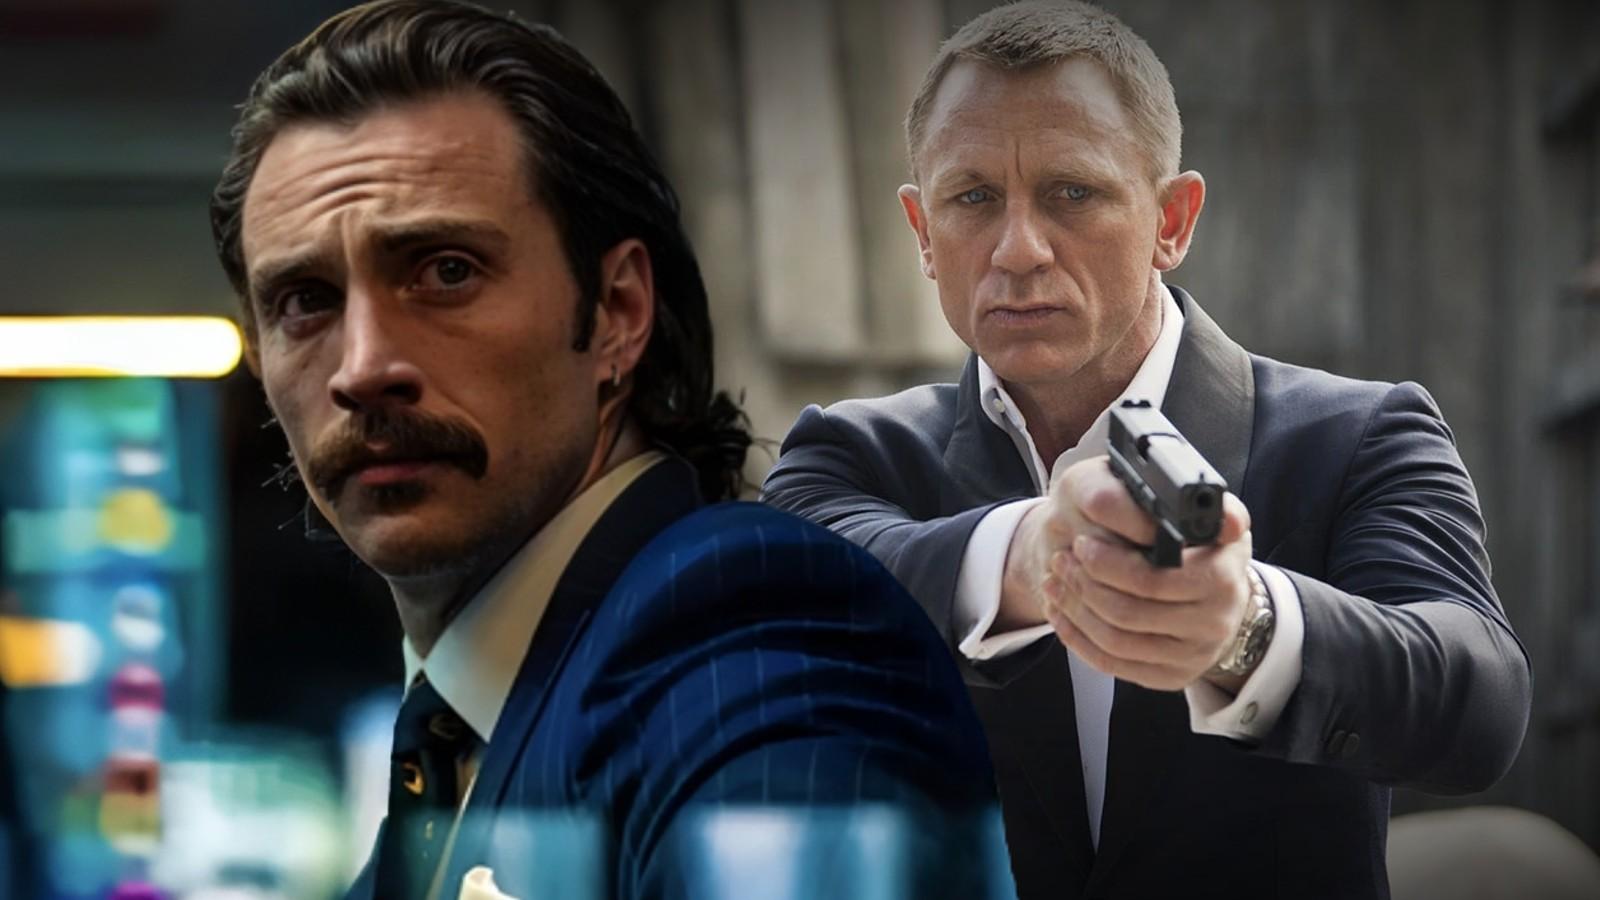 Aaron Taylor Johnson in Bullet Train and Daniel Craig as James Bond